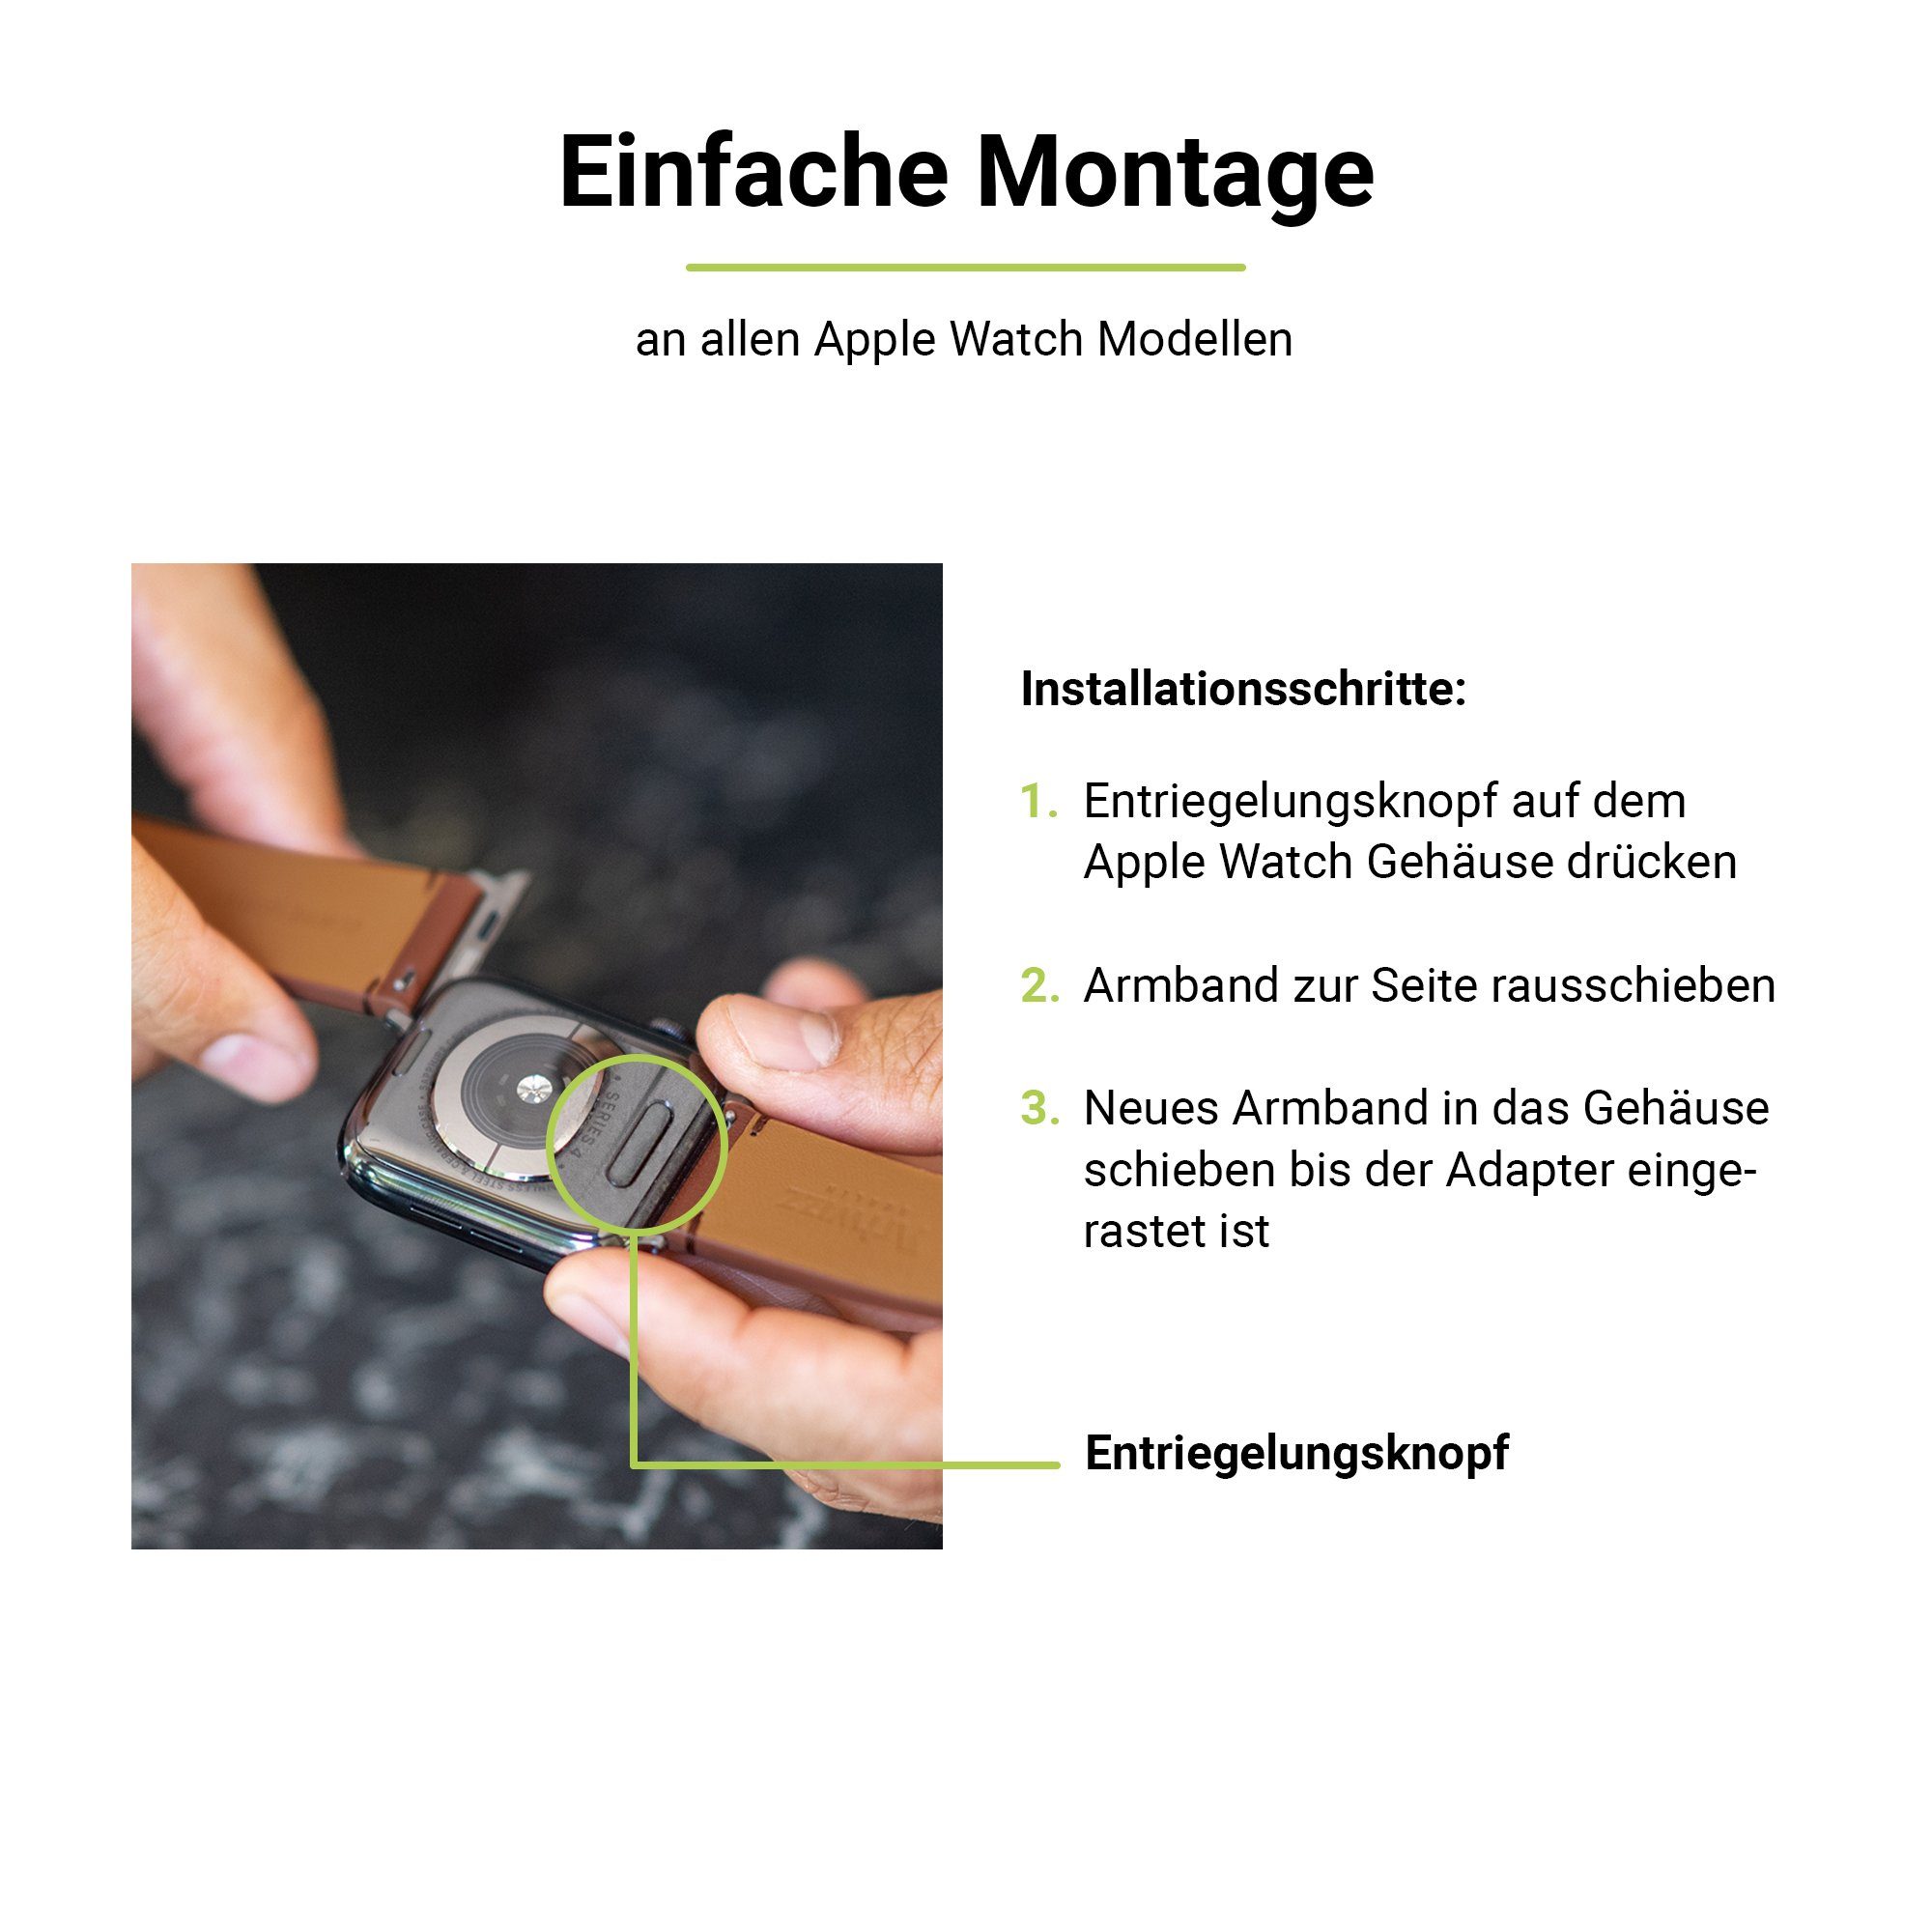 (40mm), (38mm) Watch Series Smartwatch-Armband Apple Artwizz mit SE Braun, & (41mm), Armband WatchBand Leather, Adapter, Leder 6-4 9-7 3-1